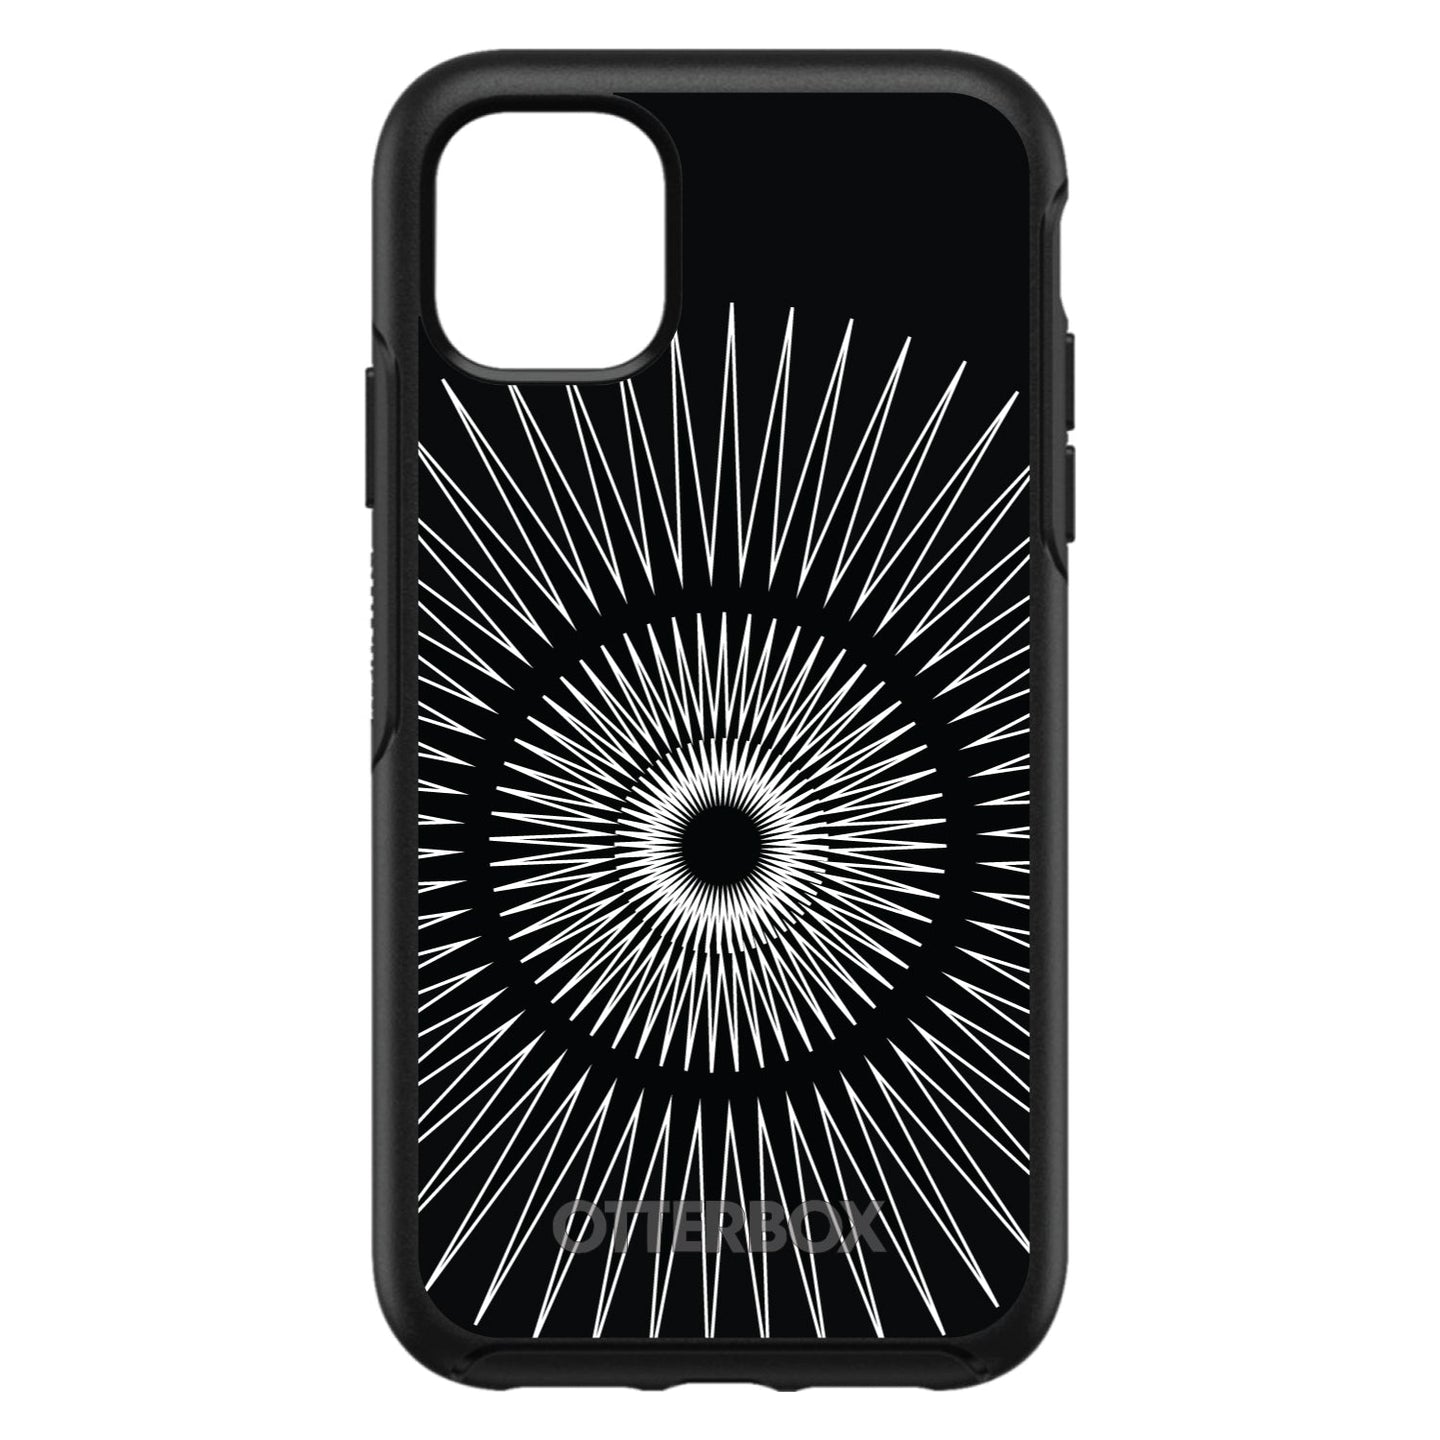 DistinctInk™ OtterBox Symmetry Series Case for Apple iPhone / Samsung Galaxy / Google Pixel - Black White Star Bursts